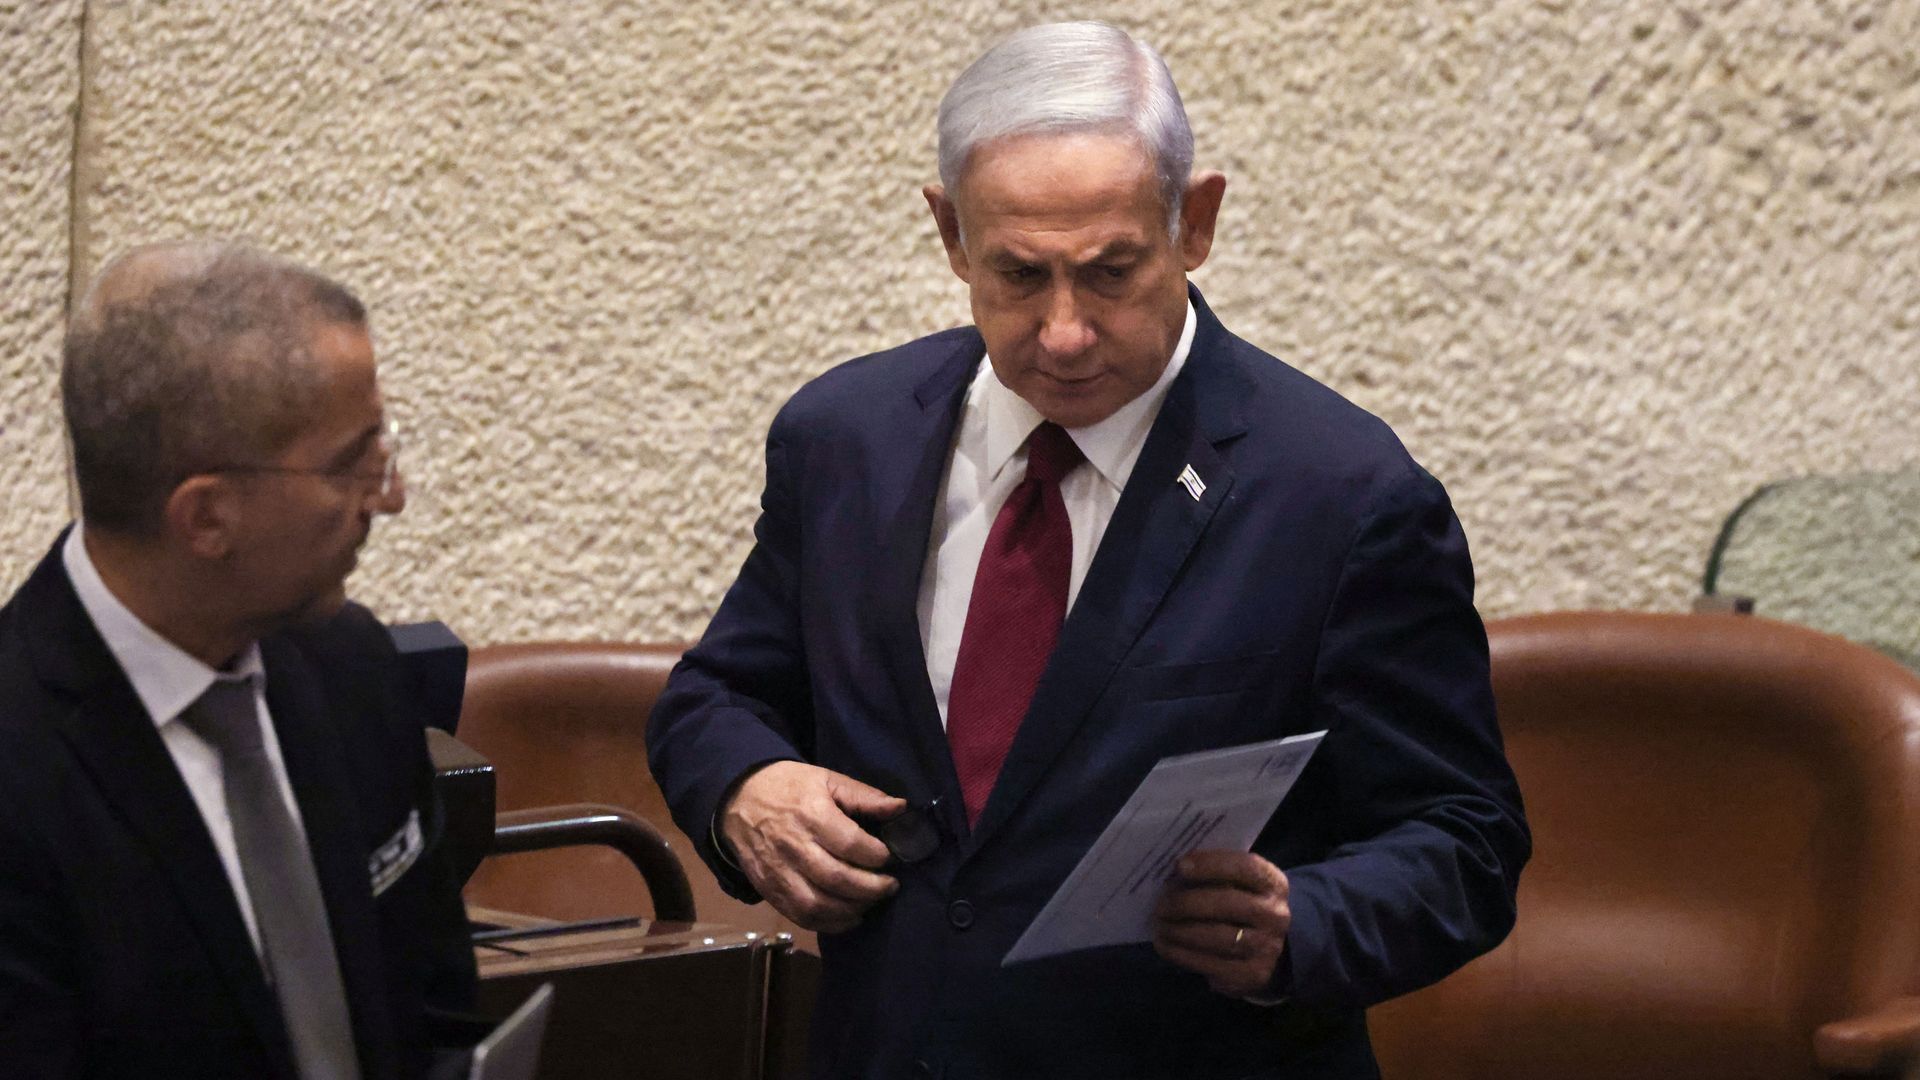 Israeli Prime Minister Benjamin Netanyahu votes in the Israeli Knesset in Jerusalem today. Photo: Menahem Khana/AFP via Getty Images